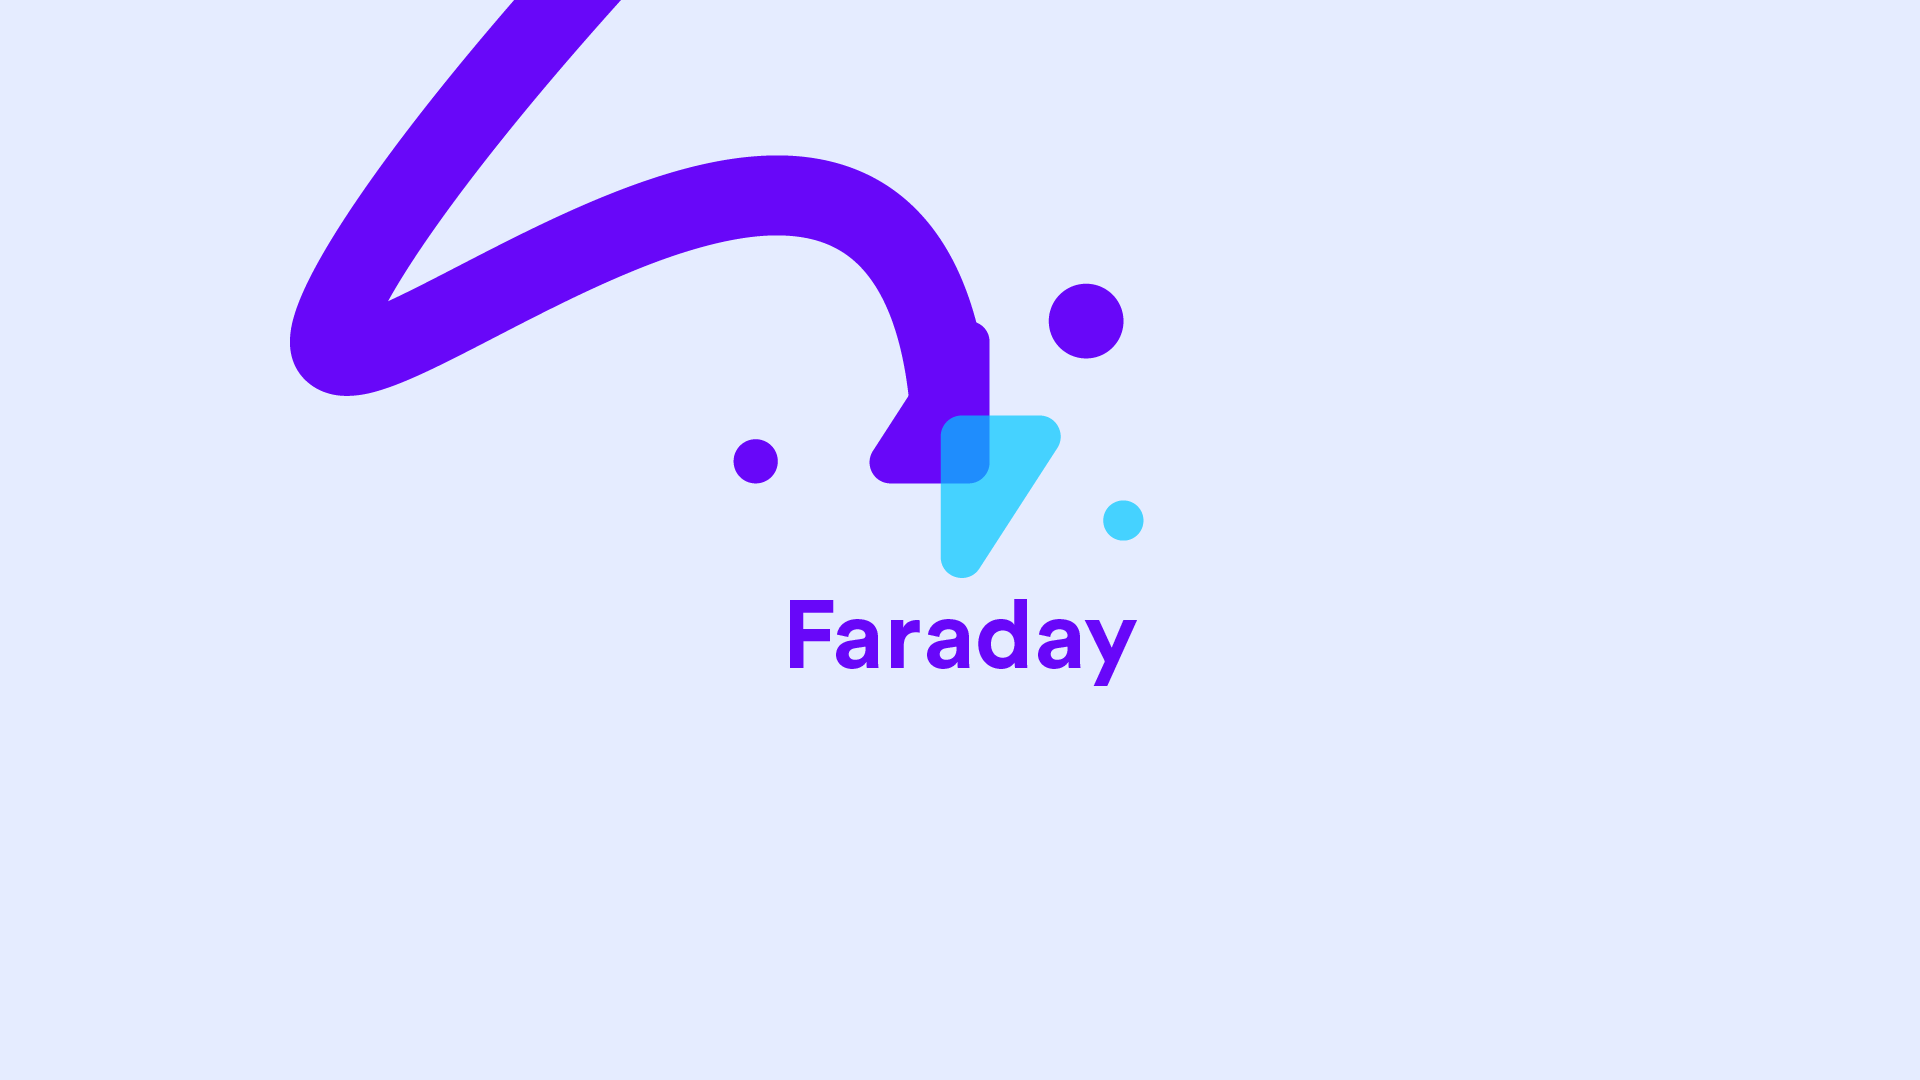 Faraday_15_v01.png